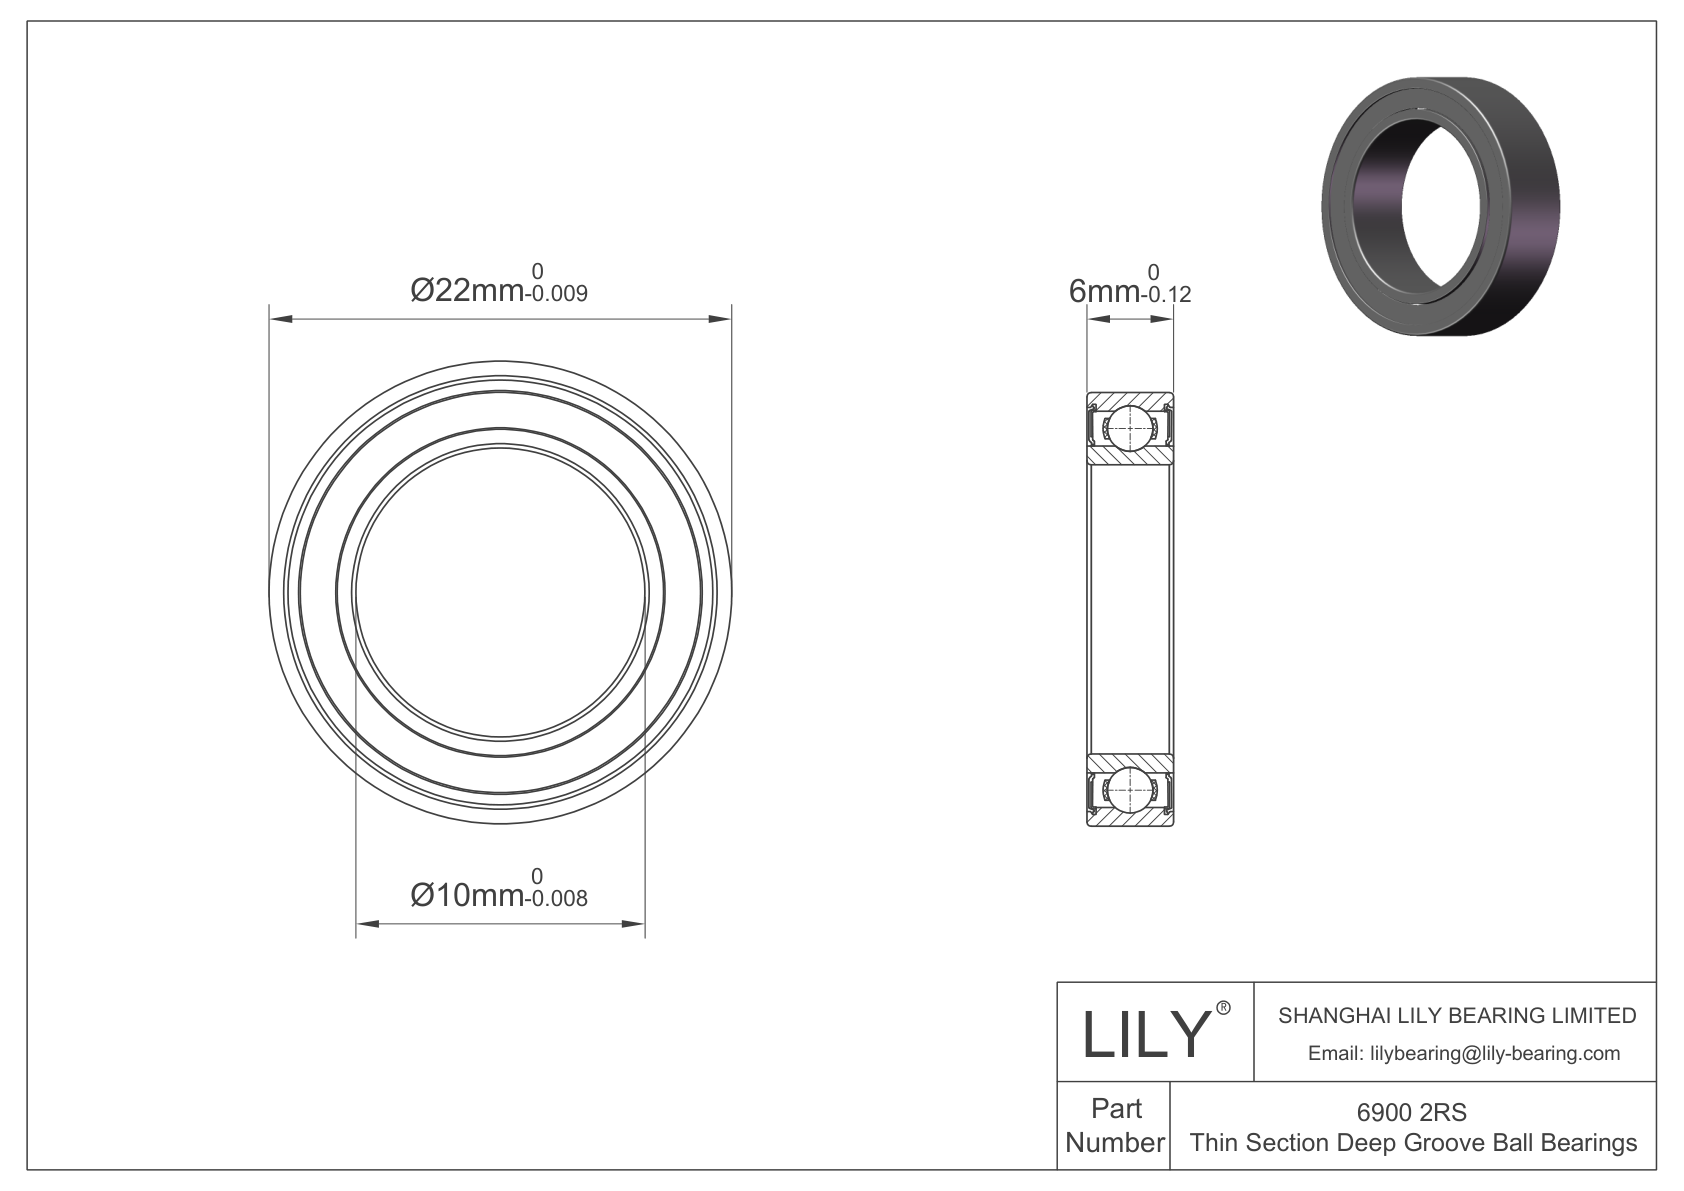 LILY-PU690025.4-7 Polyurethane Coated Bearing cad drawing